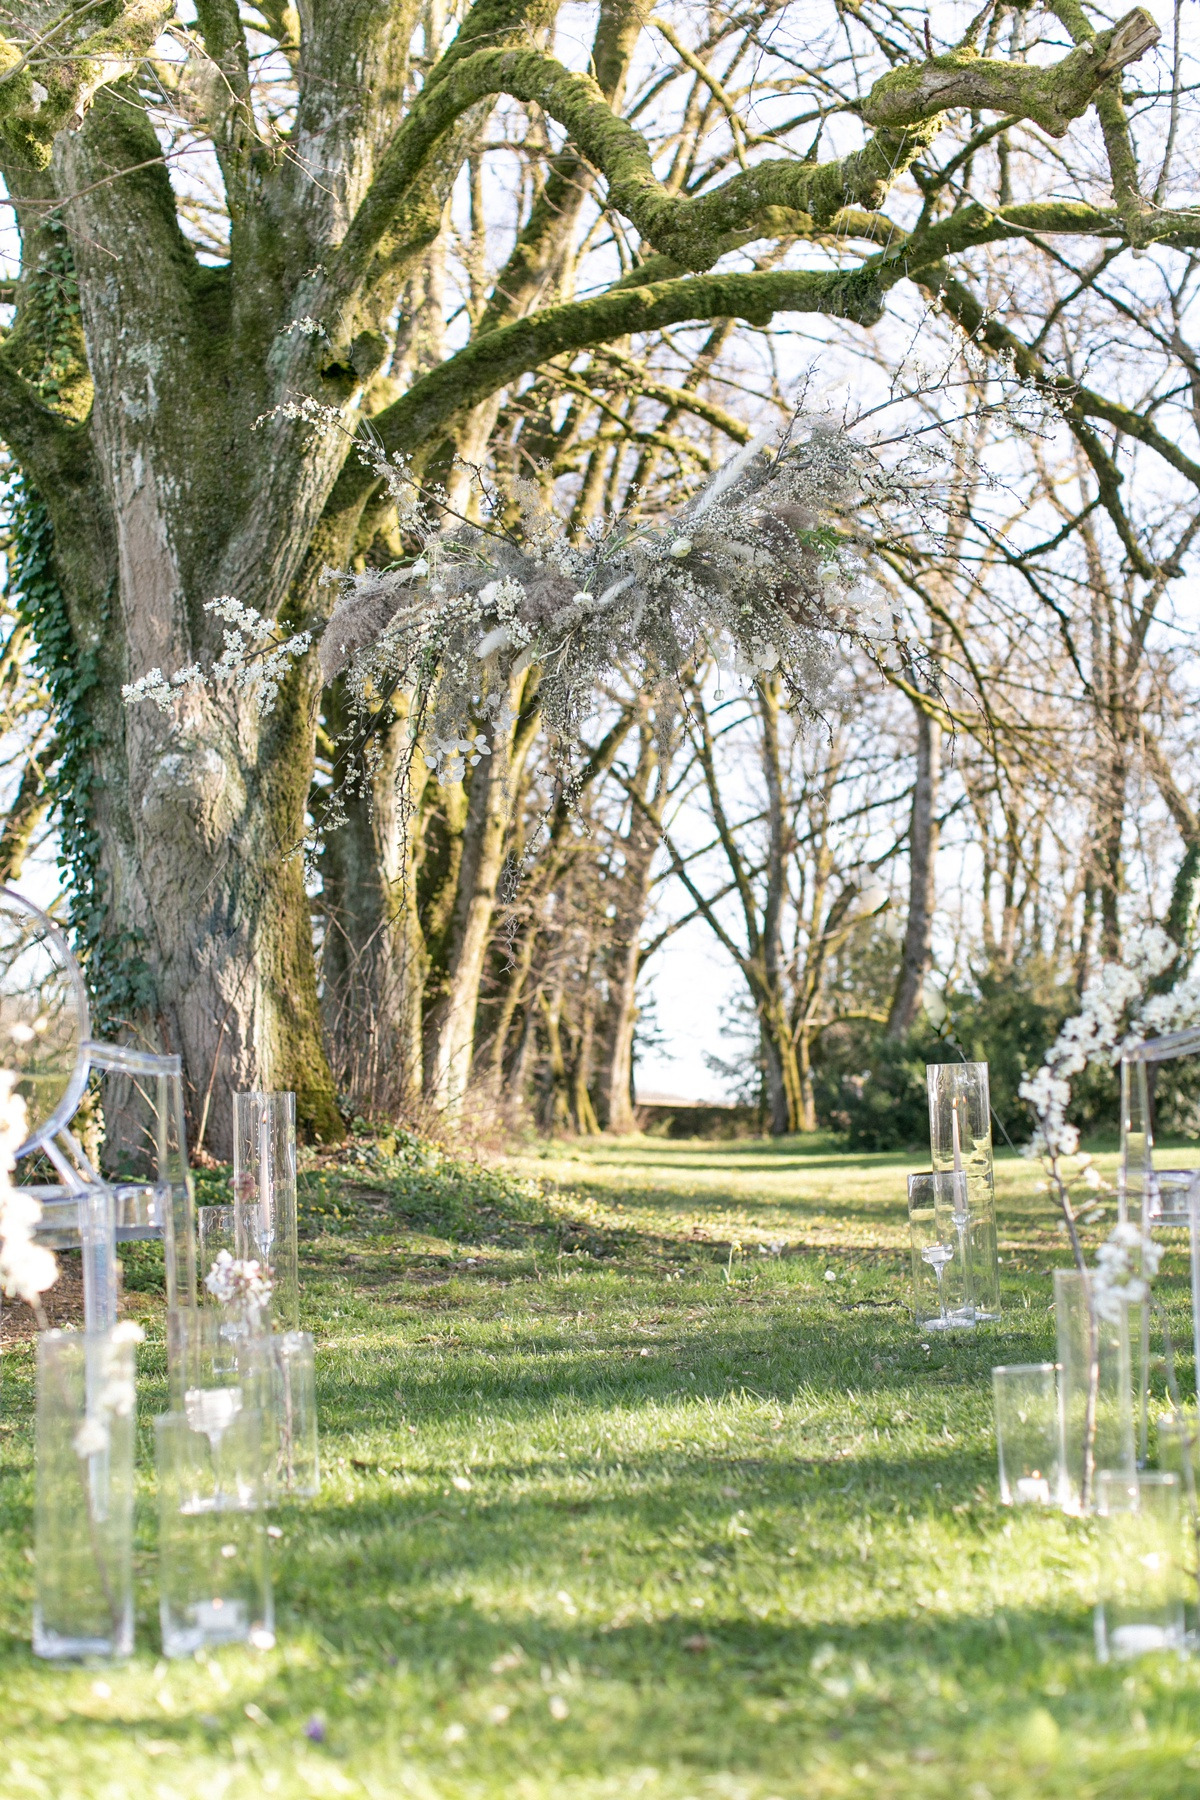 chateau-de-redon-ethereal-spring-wedding